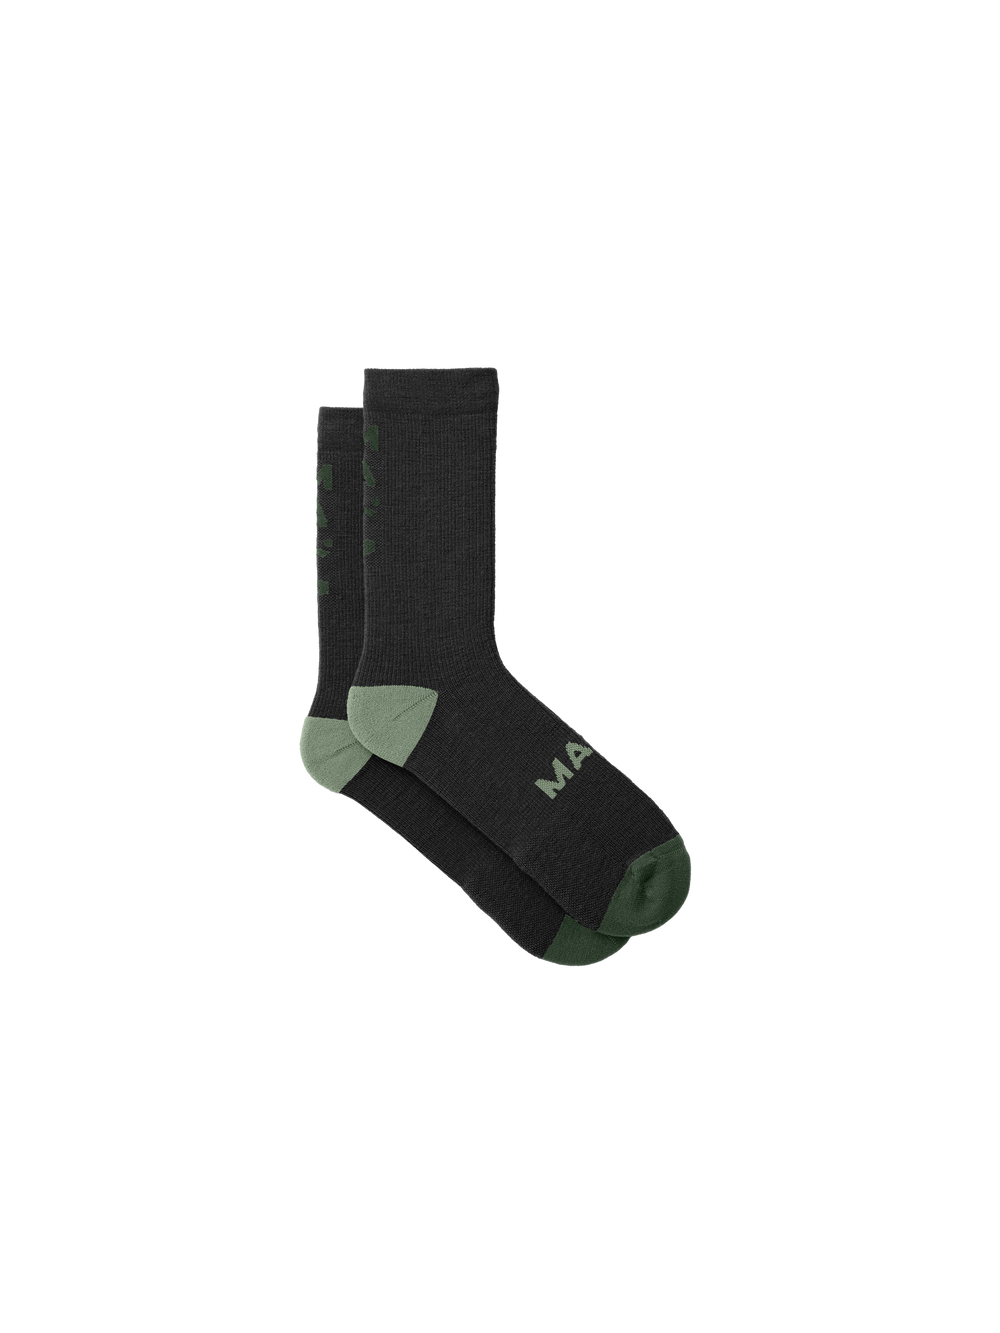 Product Image for TA + MAAP Socks